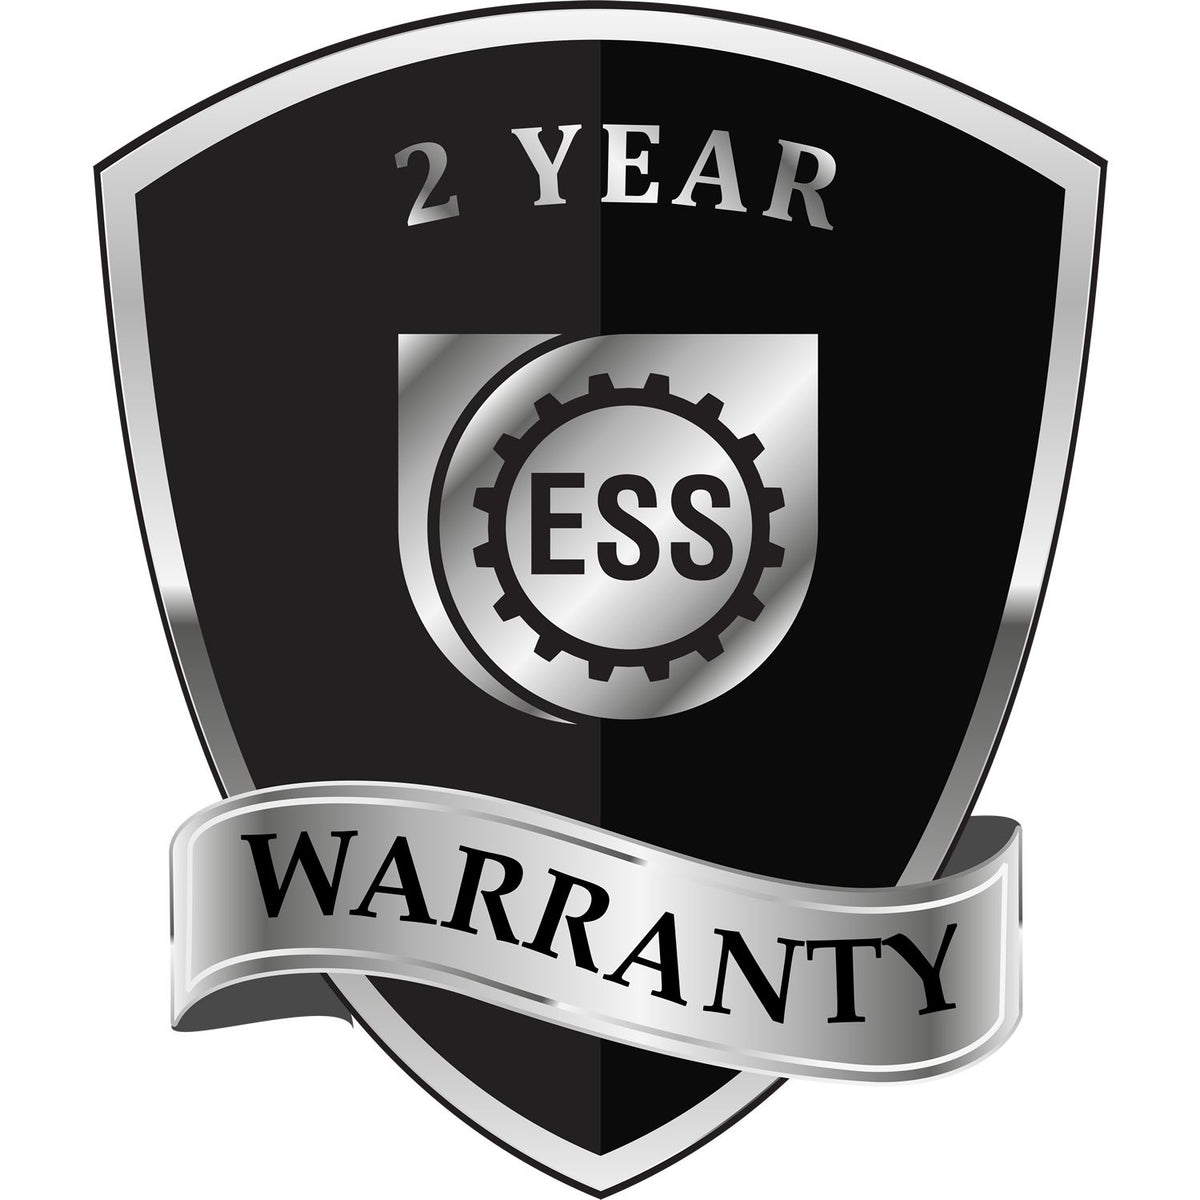 A black and silver badge or emblem showing warranty information for the South Dakota Geologist Desk Seal